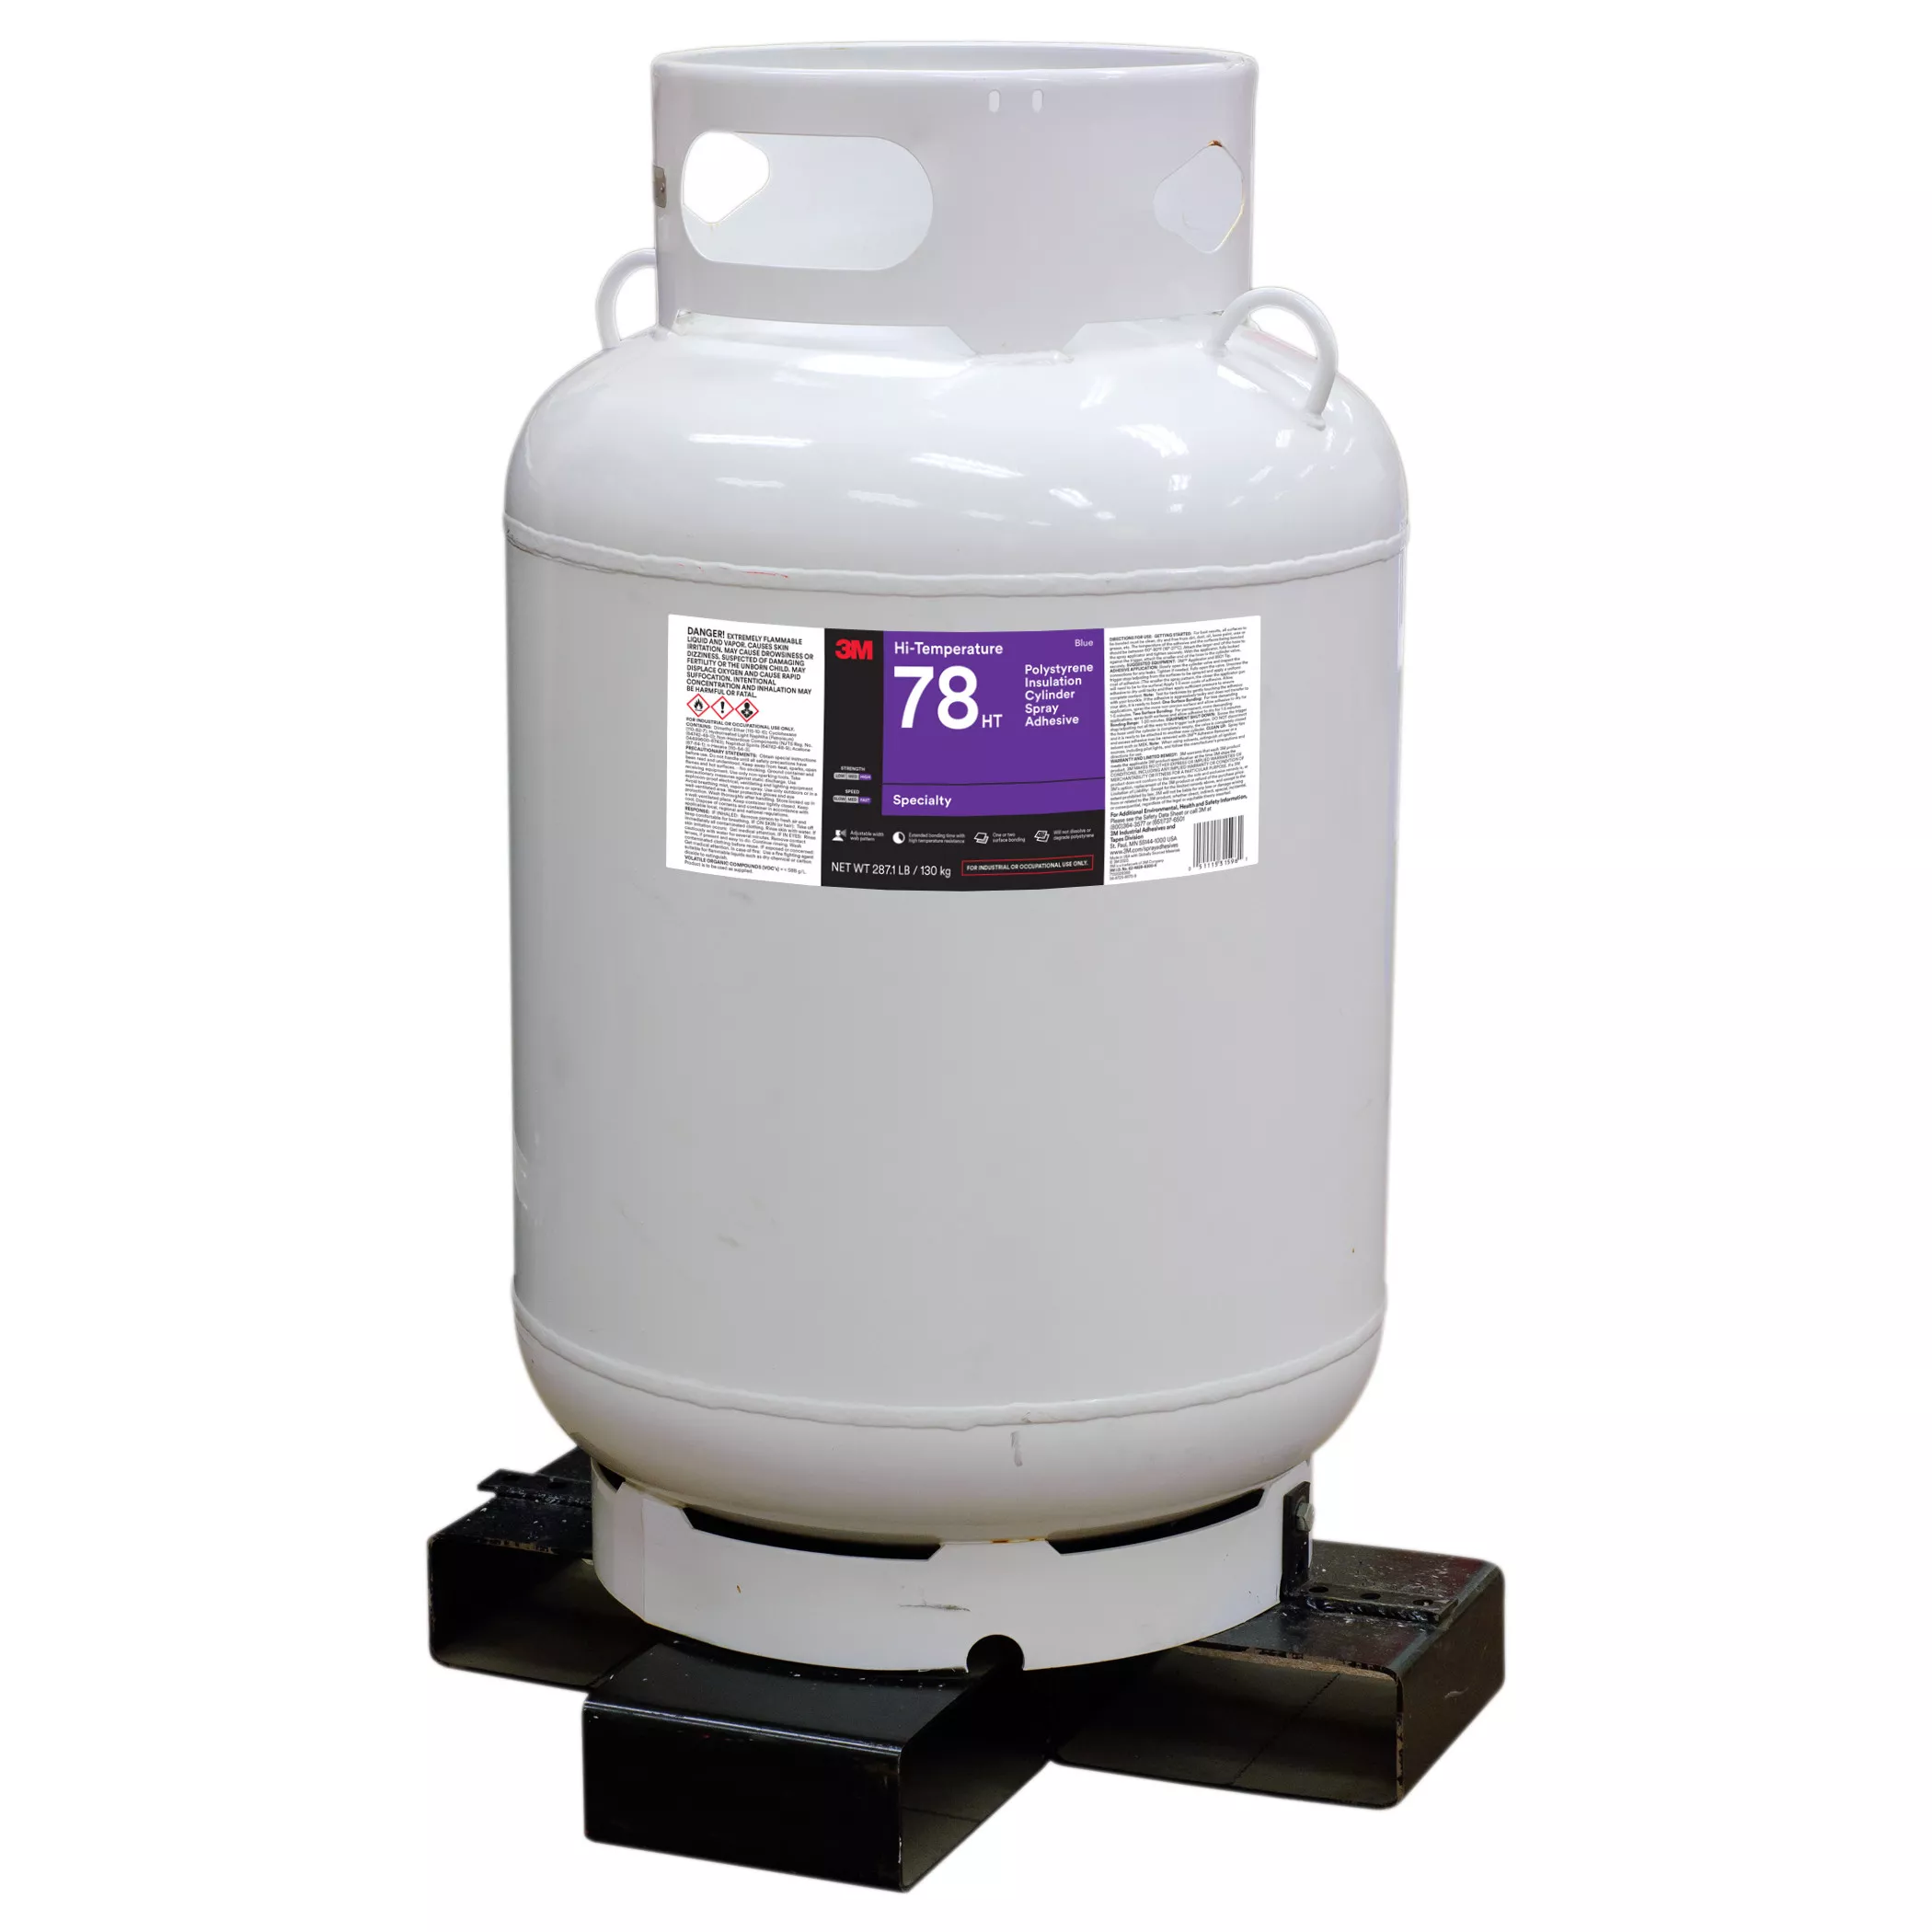 3M™ Hi-Temperature Polystyrene Insulation 78, HT Cylinder Spray
Adhesive, Blue, Jumbo (Net Wt 287.1 lb), 1 Each/Cylinder